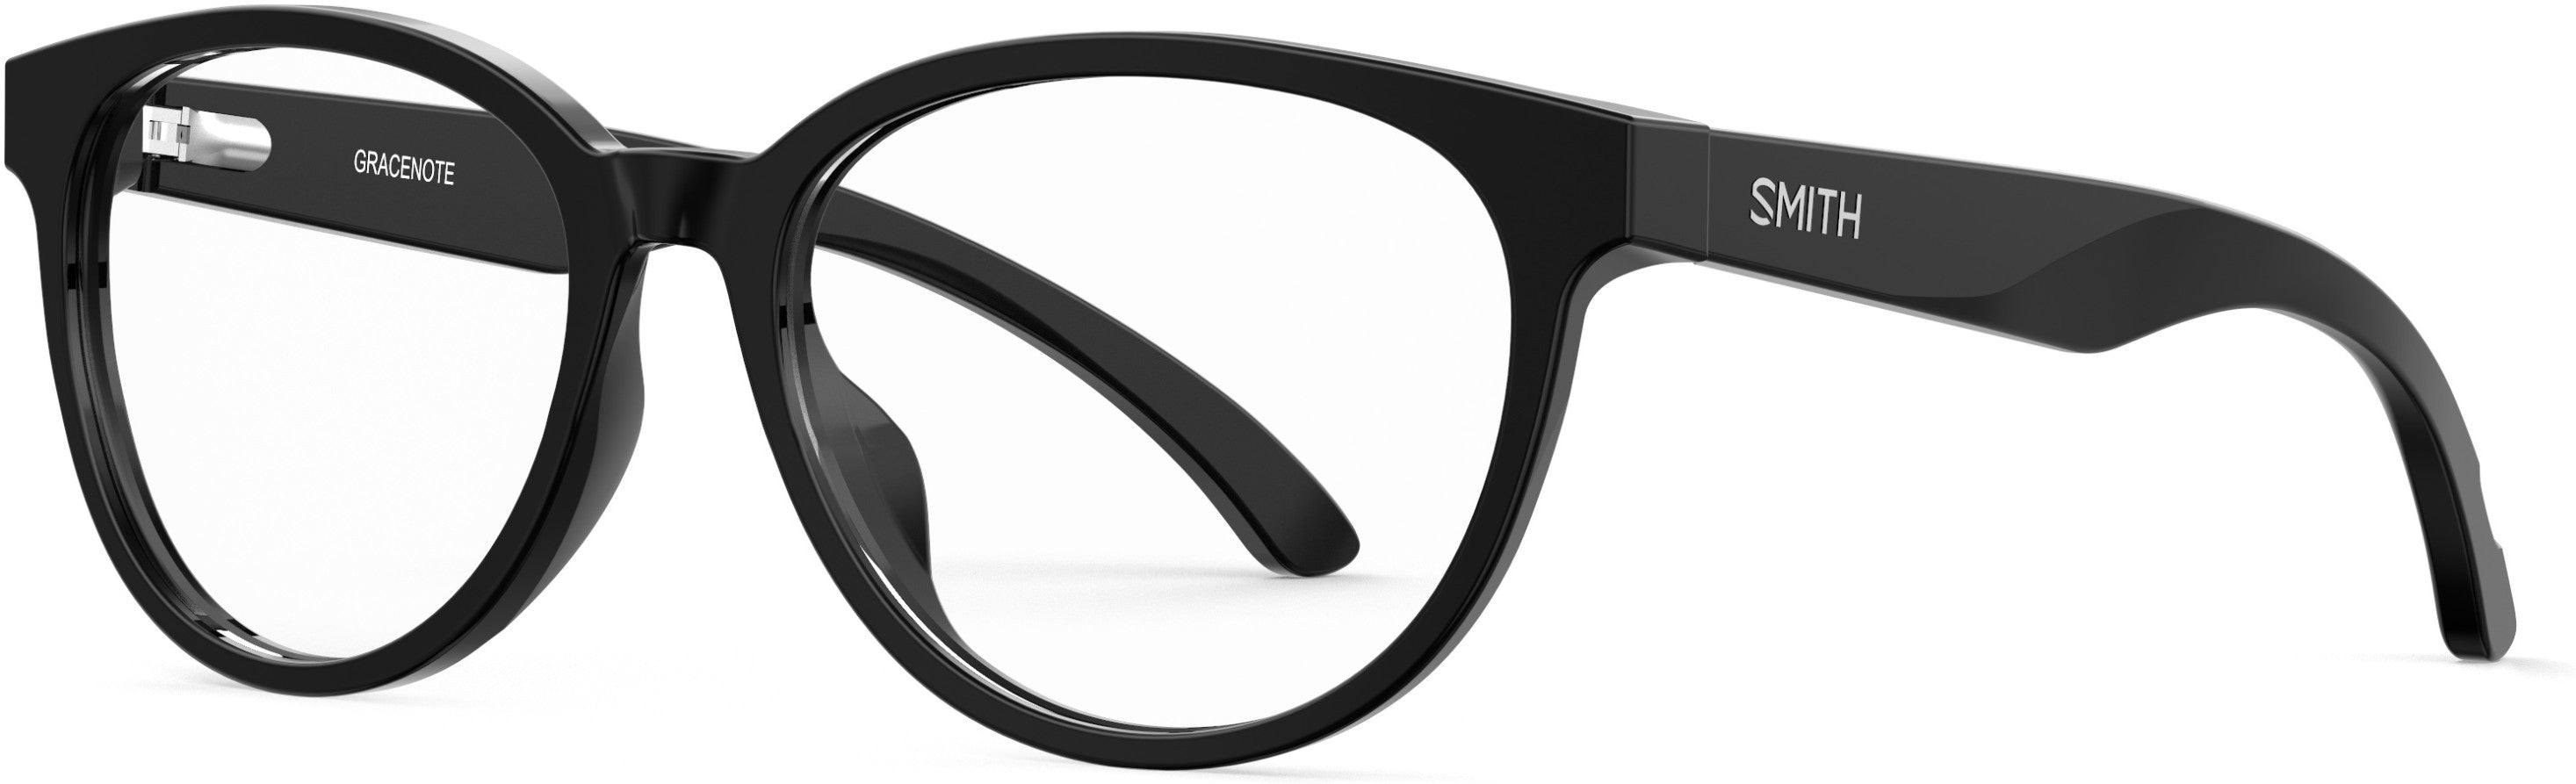 Smith Gracenote Oval Modified Eyeglasses 0807-0807  Black (00 Demo Lens)